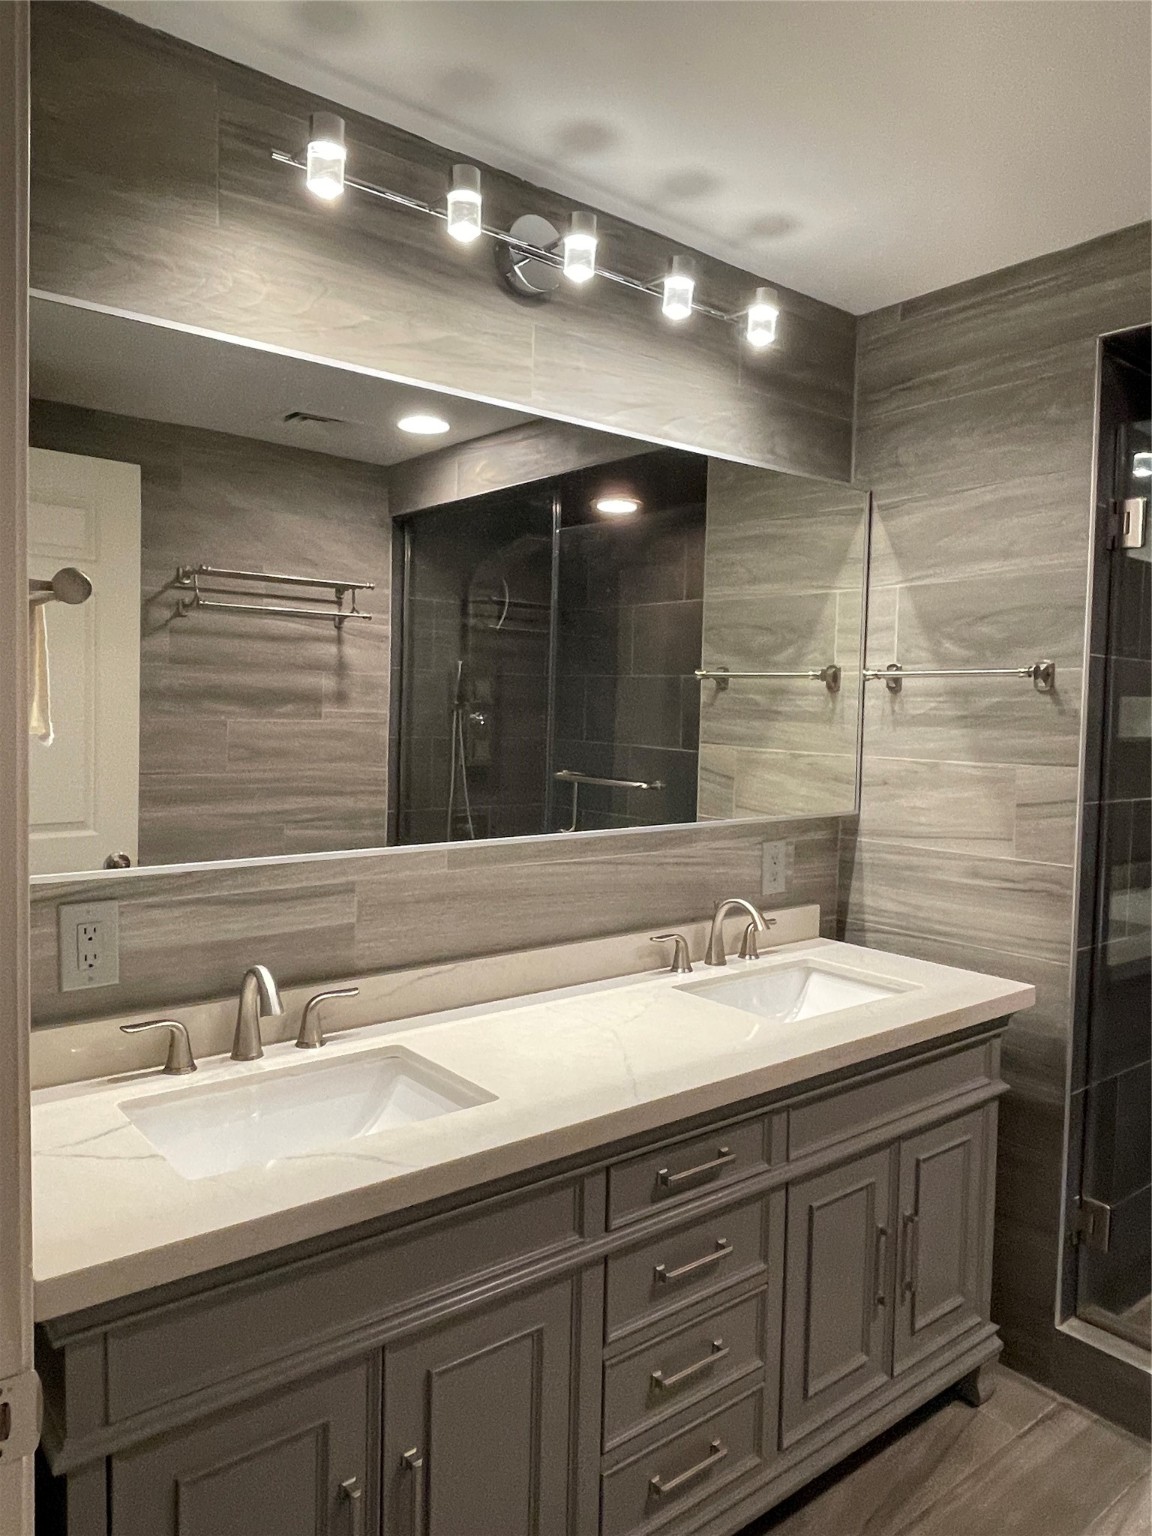 Double-sink vanity in fully ceramic-tiled Master Bathroom